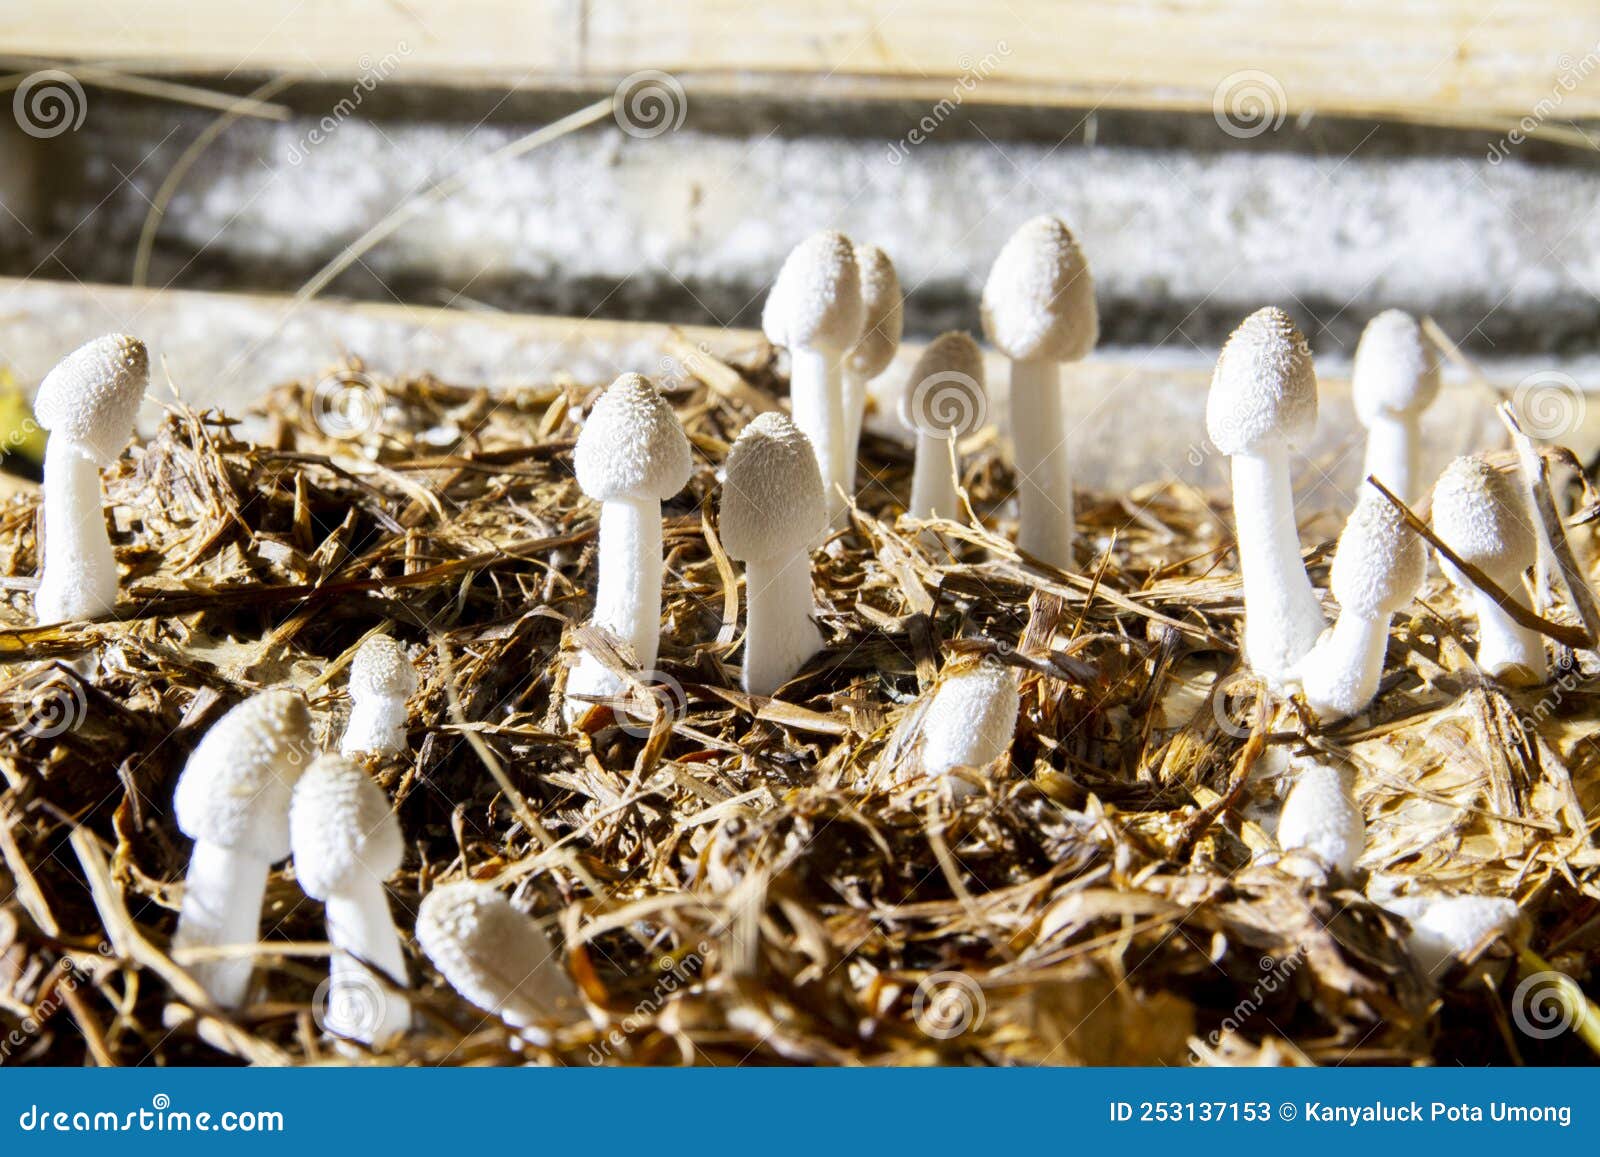 Rice-Straw Mushroom Production